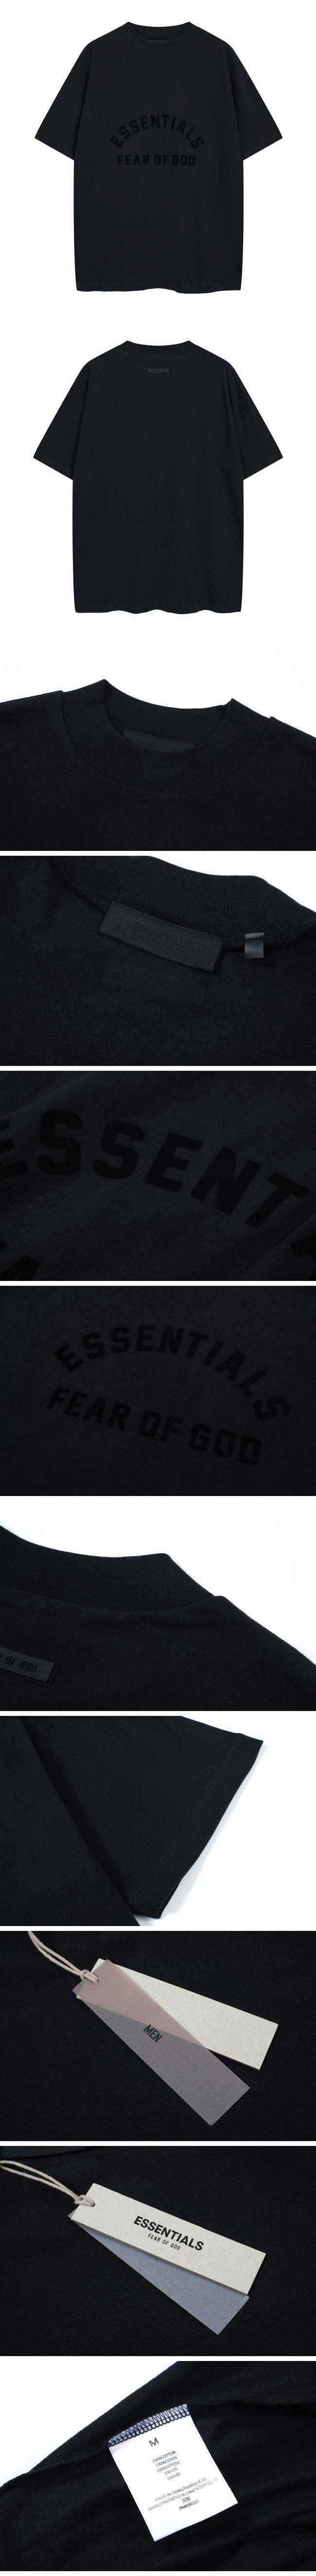 Fear of God Essentials Fog Tee フィアオブゴッド エッセンシャルズ Fog Tシャツ ブラック